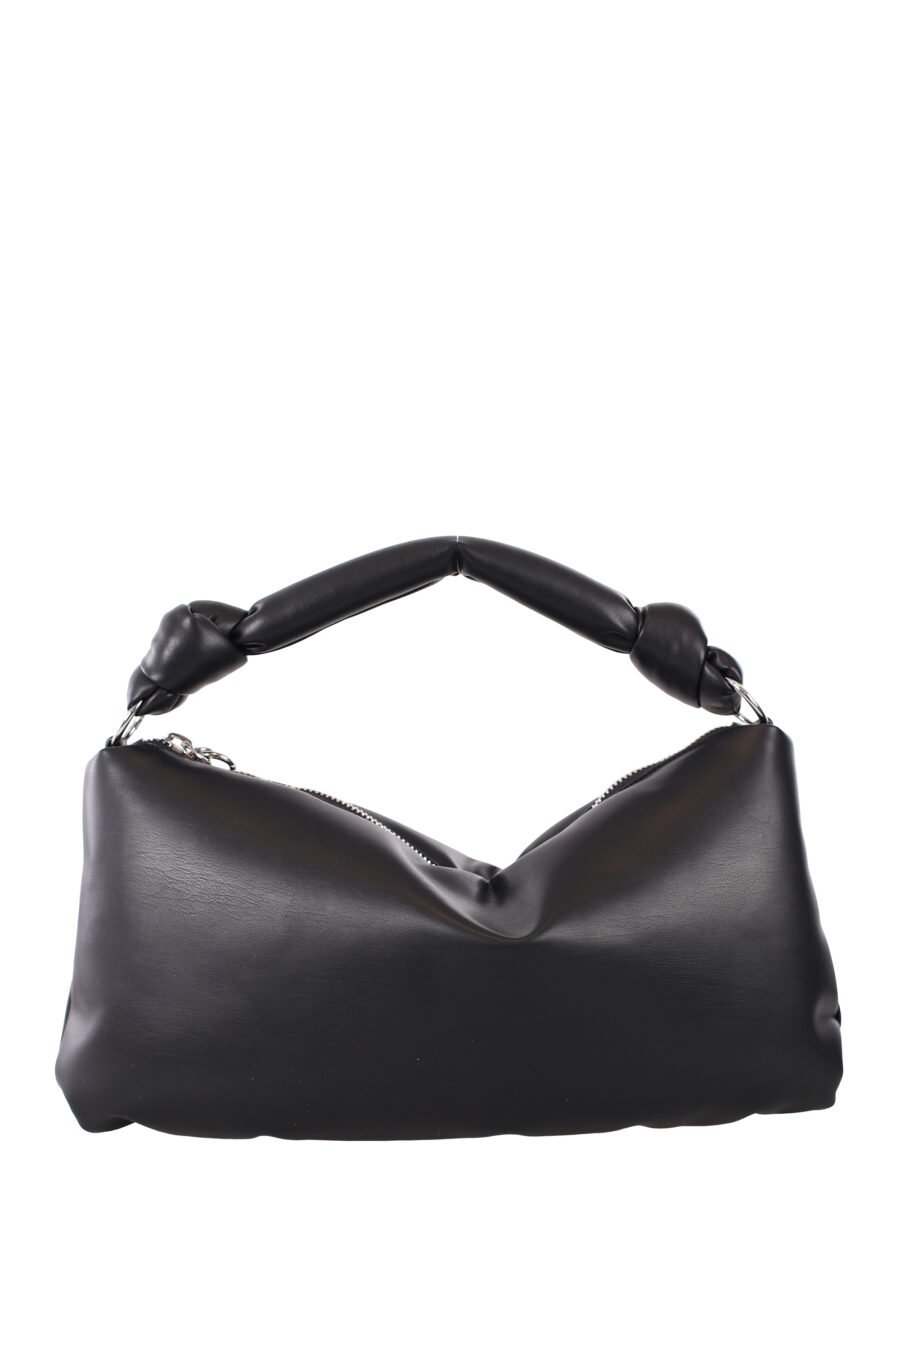 Black knotted shoulder bag with monochrome logo - IMG 1668